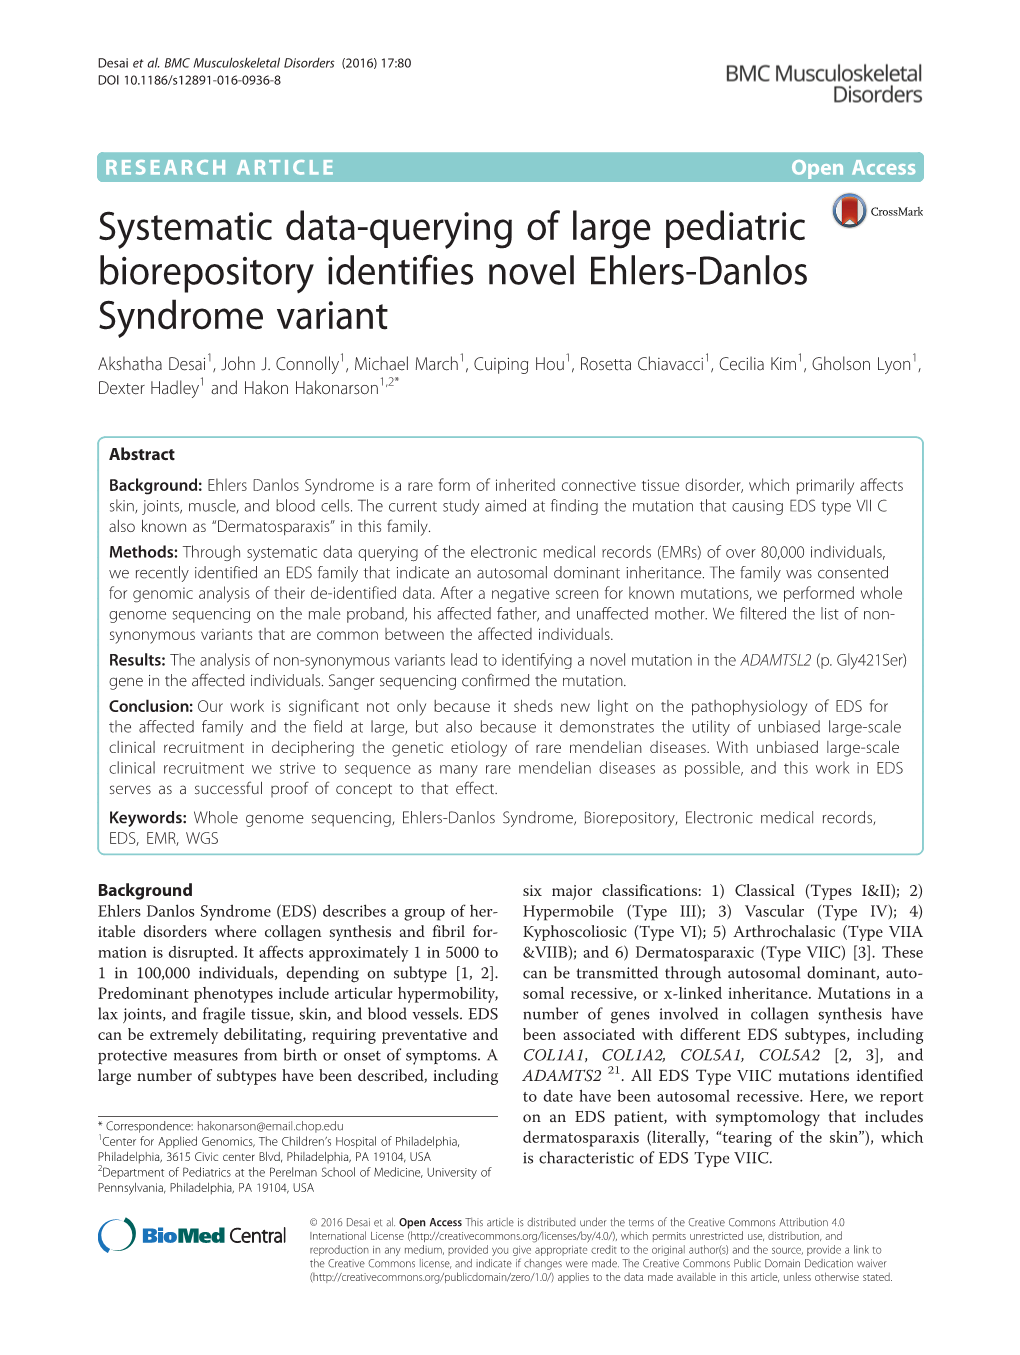 Systematic Data-Querying of Large Pediatric Biorepository Identifies Novel Ehlers-Danlos Syndrome Variant Akshatha Desai1, John J